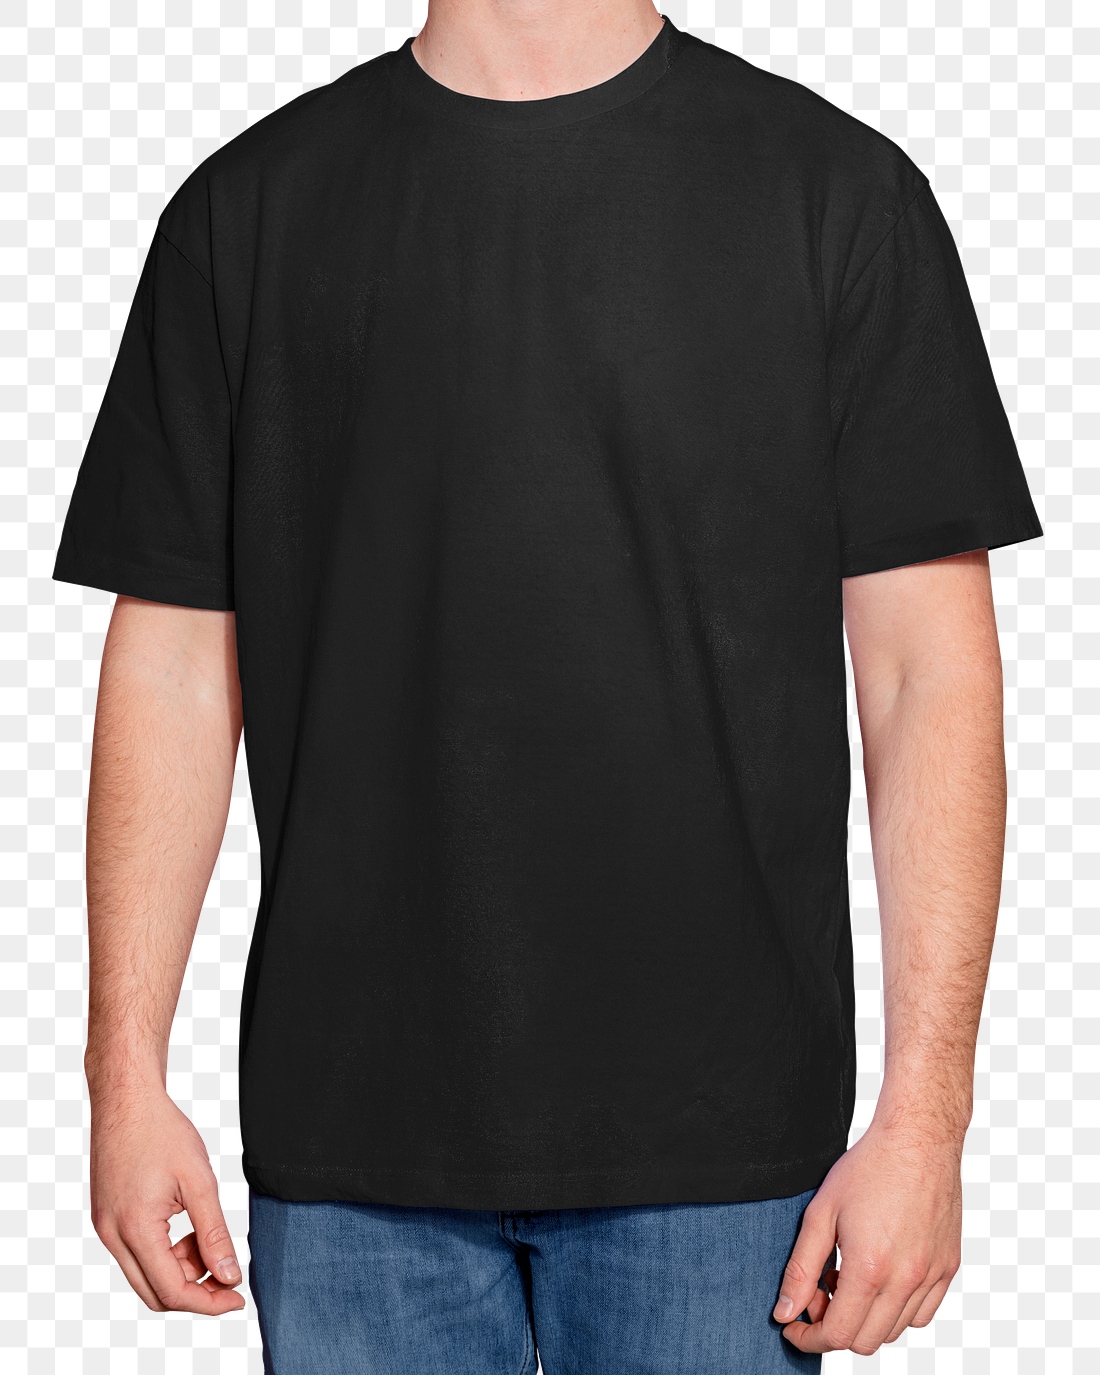 Black tshirt png sticker, transparent | Premium PNG - rawpixel